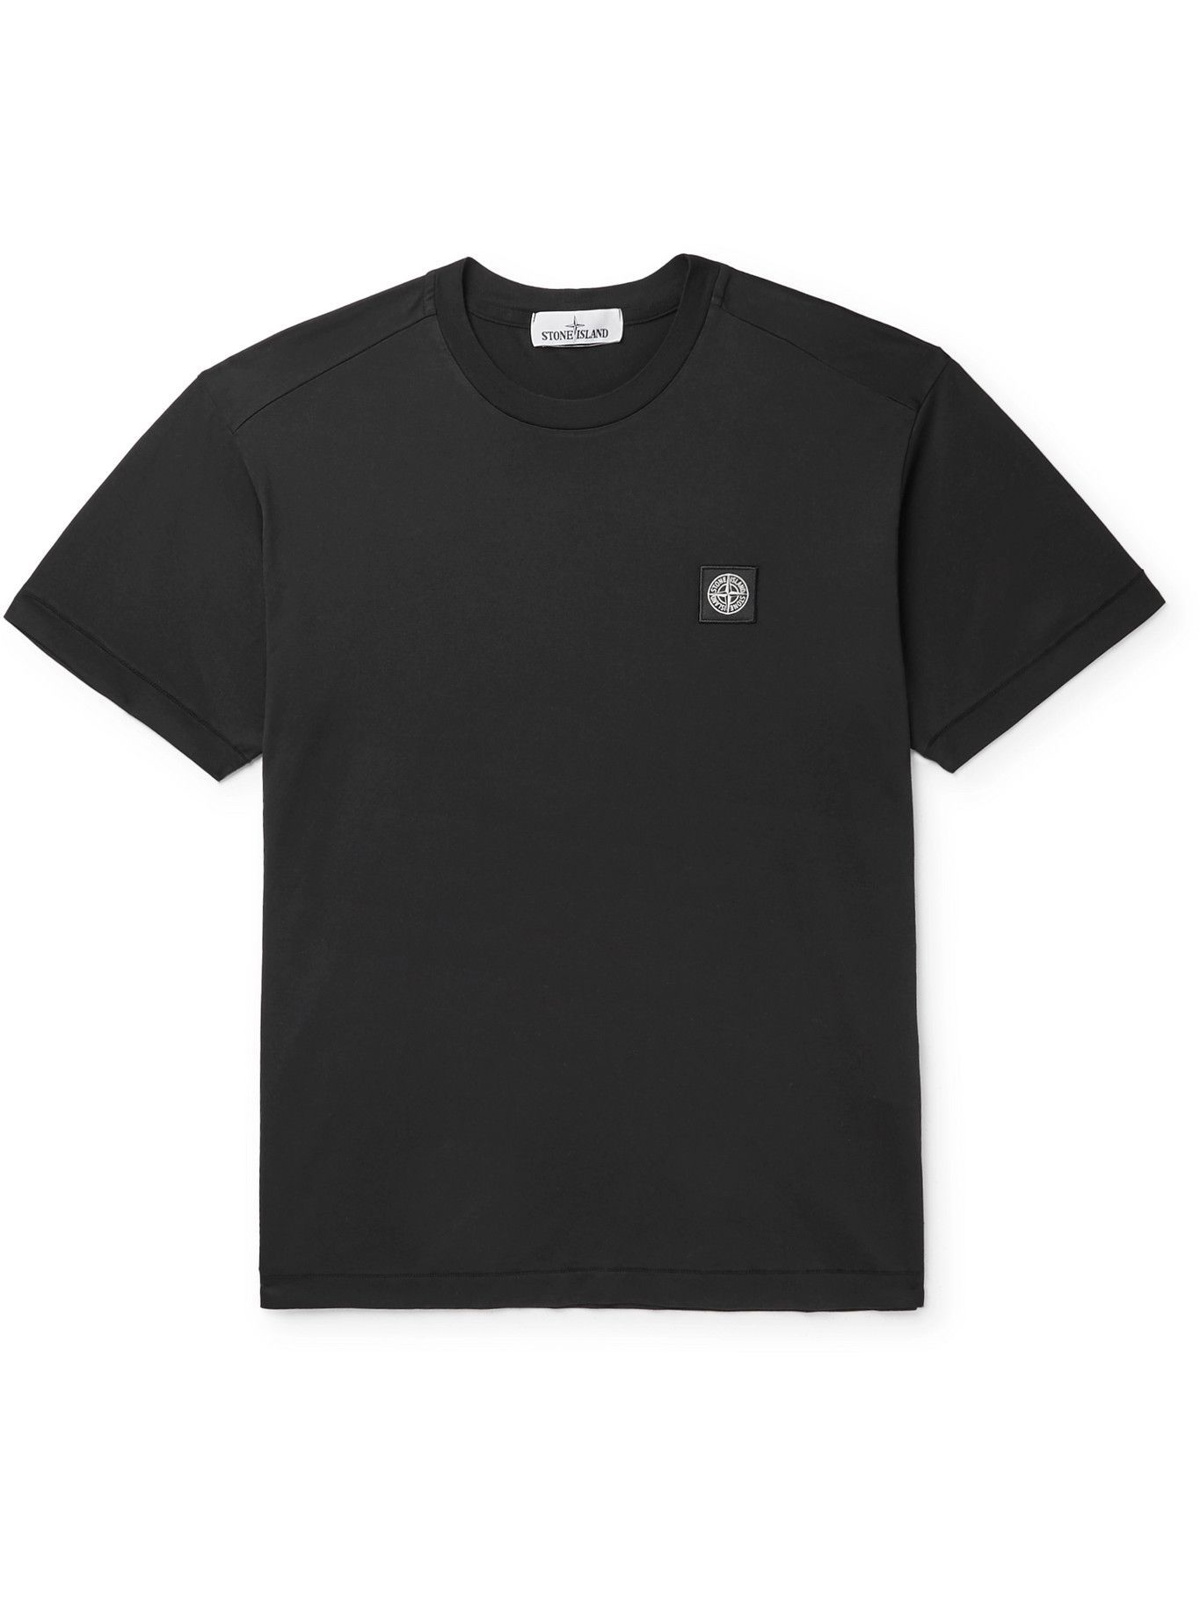 Stone Island - Logo-Appliquéd Cotton-Jersey T-Shirt - Black Stone Island